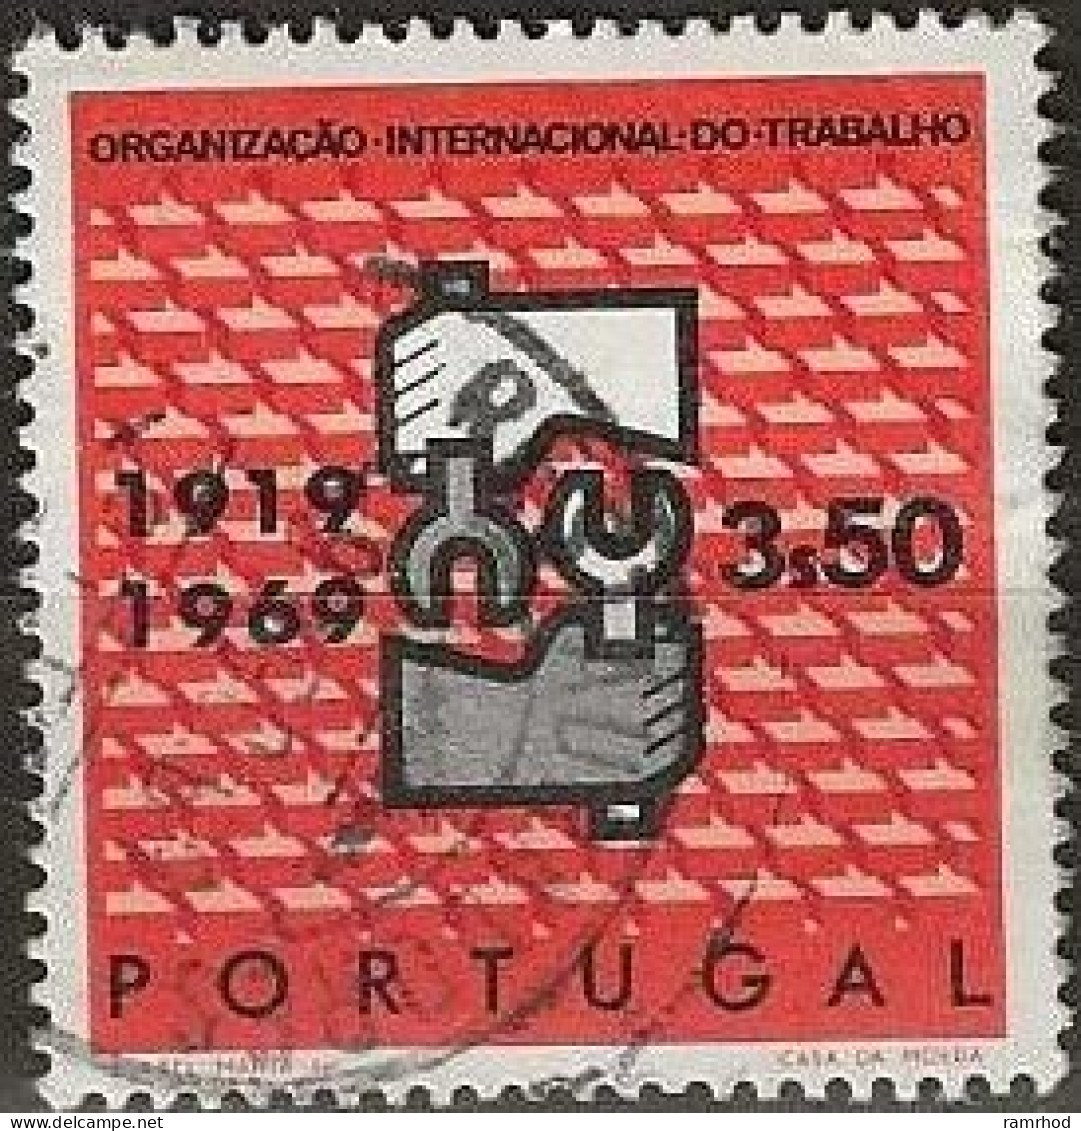 PORTUGAL 1969 50th Anniversary Of ILO - 3e50 - ILO Emblem FU - Oblitérés